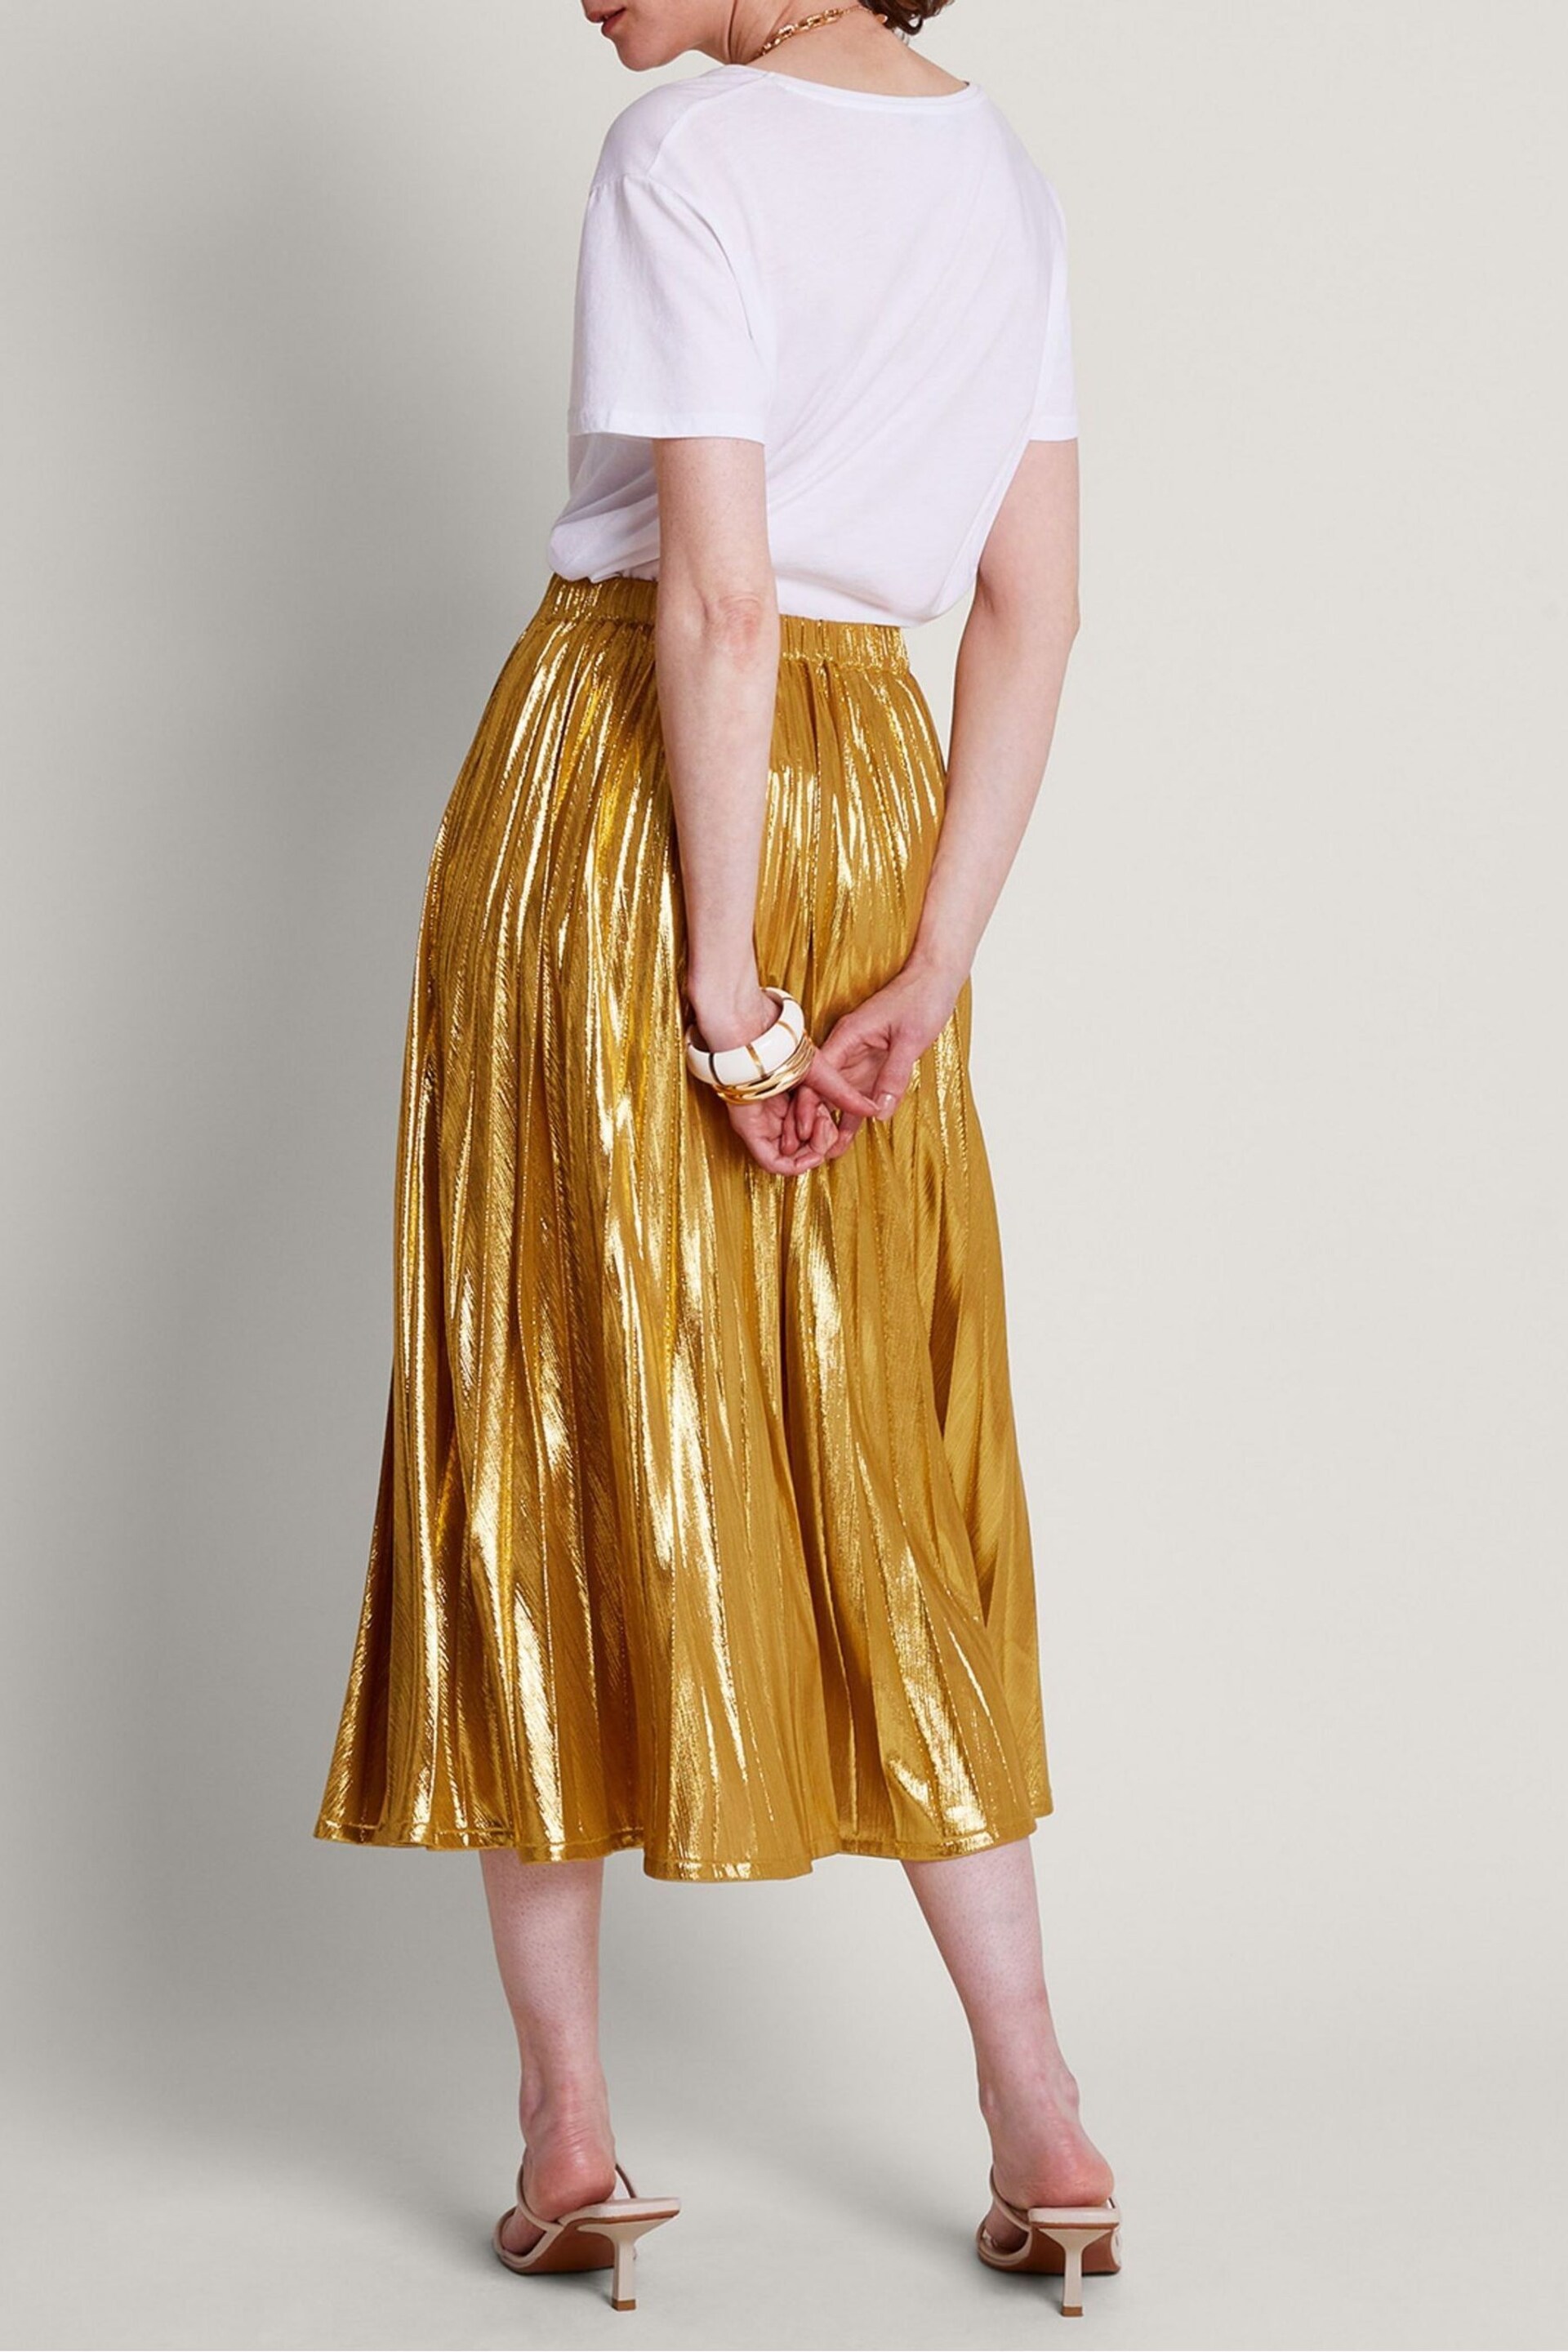 Monsoon Gold Mia Pleated Skirt - Image 4 of 4